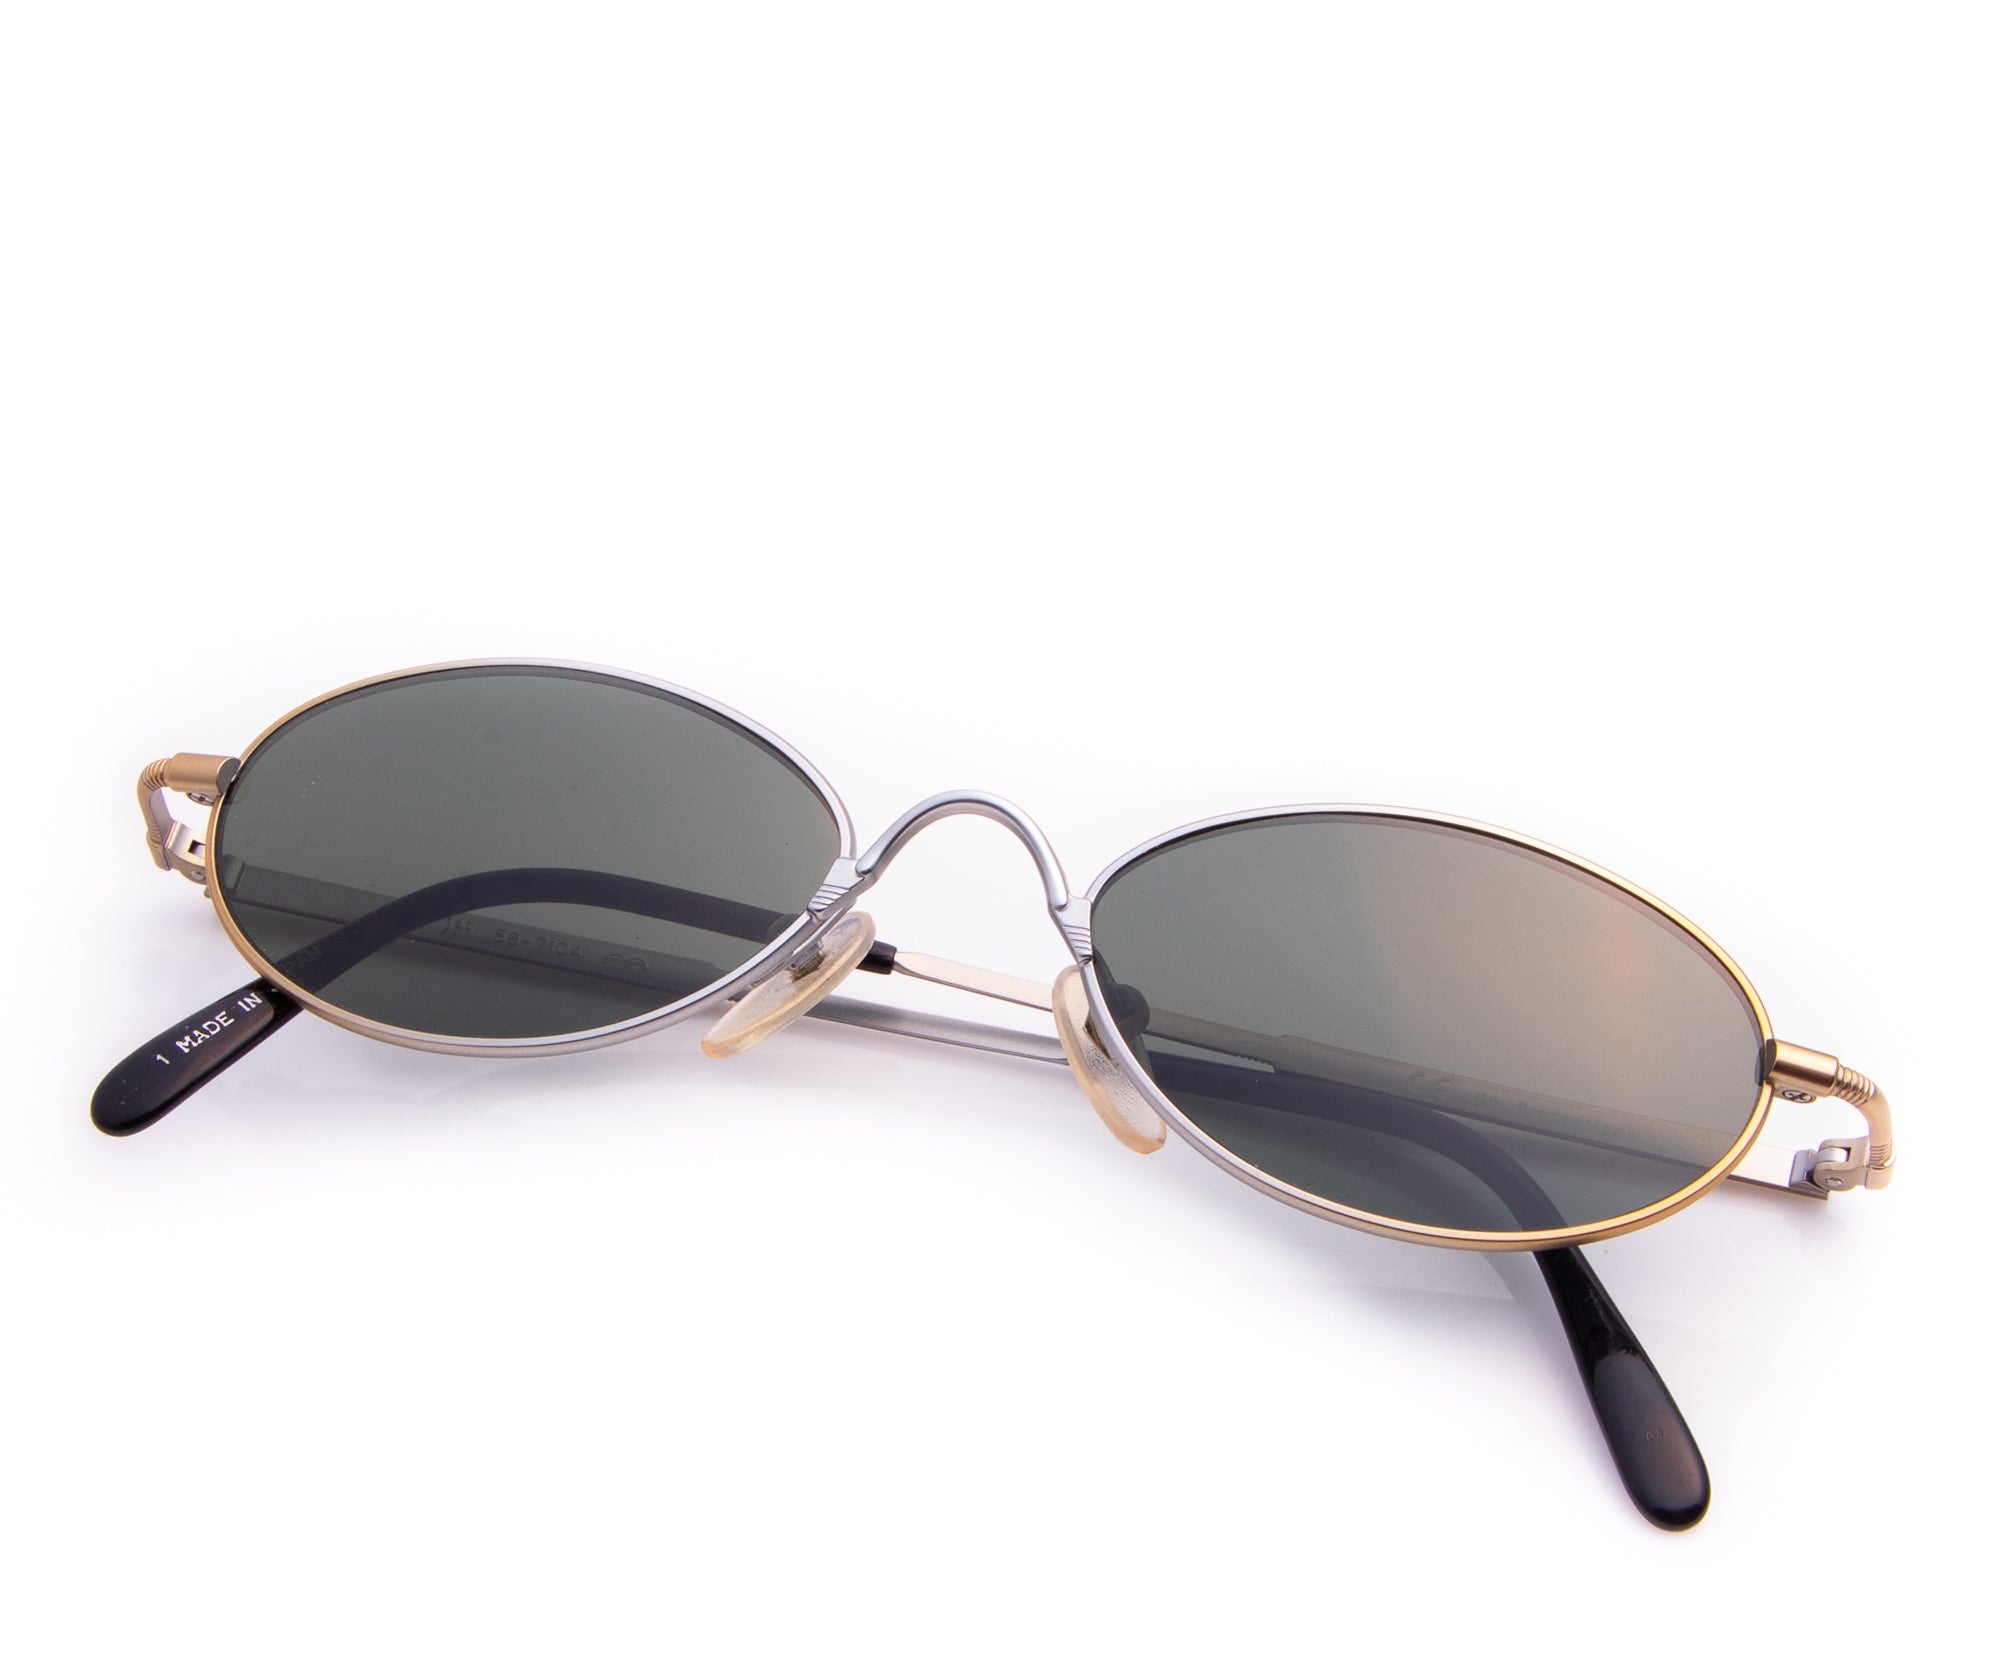 Jean Paul Gaultier sunglasses 58-0044 - サングラス/メガネ